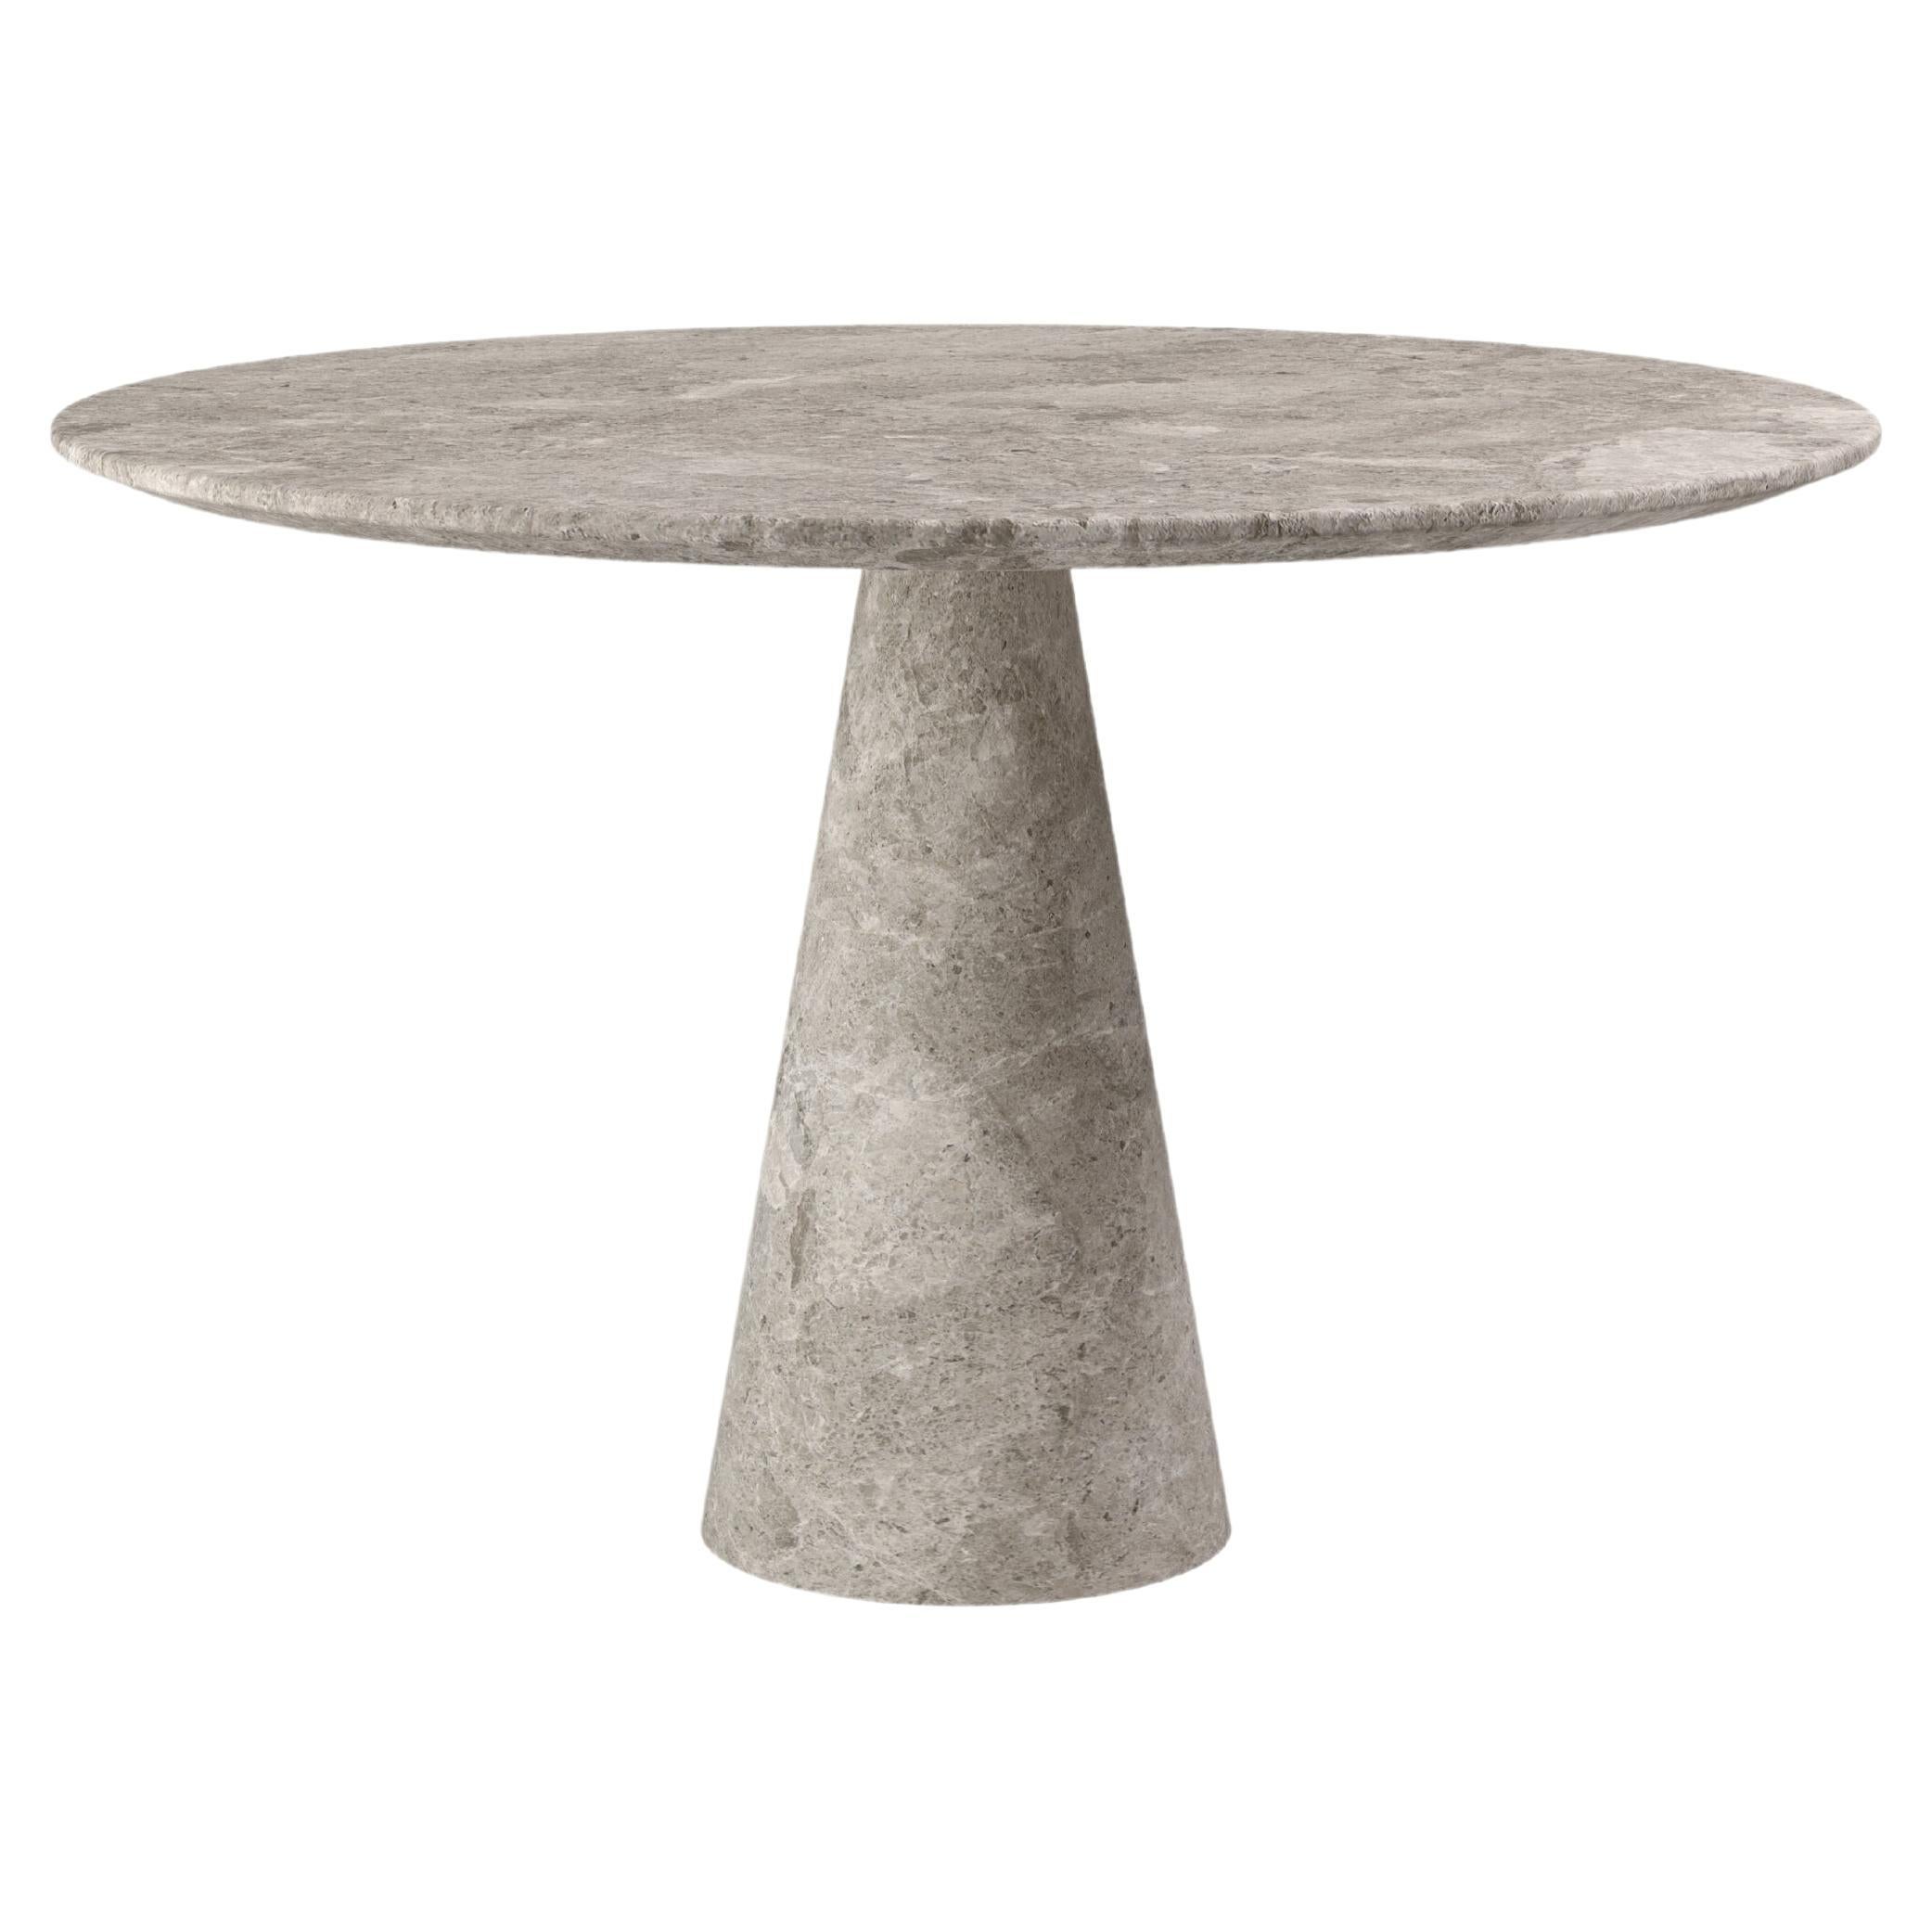 FORM(LA) Cono Round Dining Table 60”L x 60"W x 30”H Tundra Gray Marble